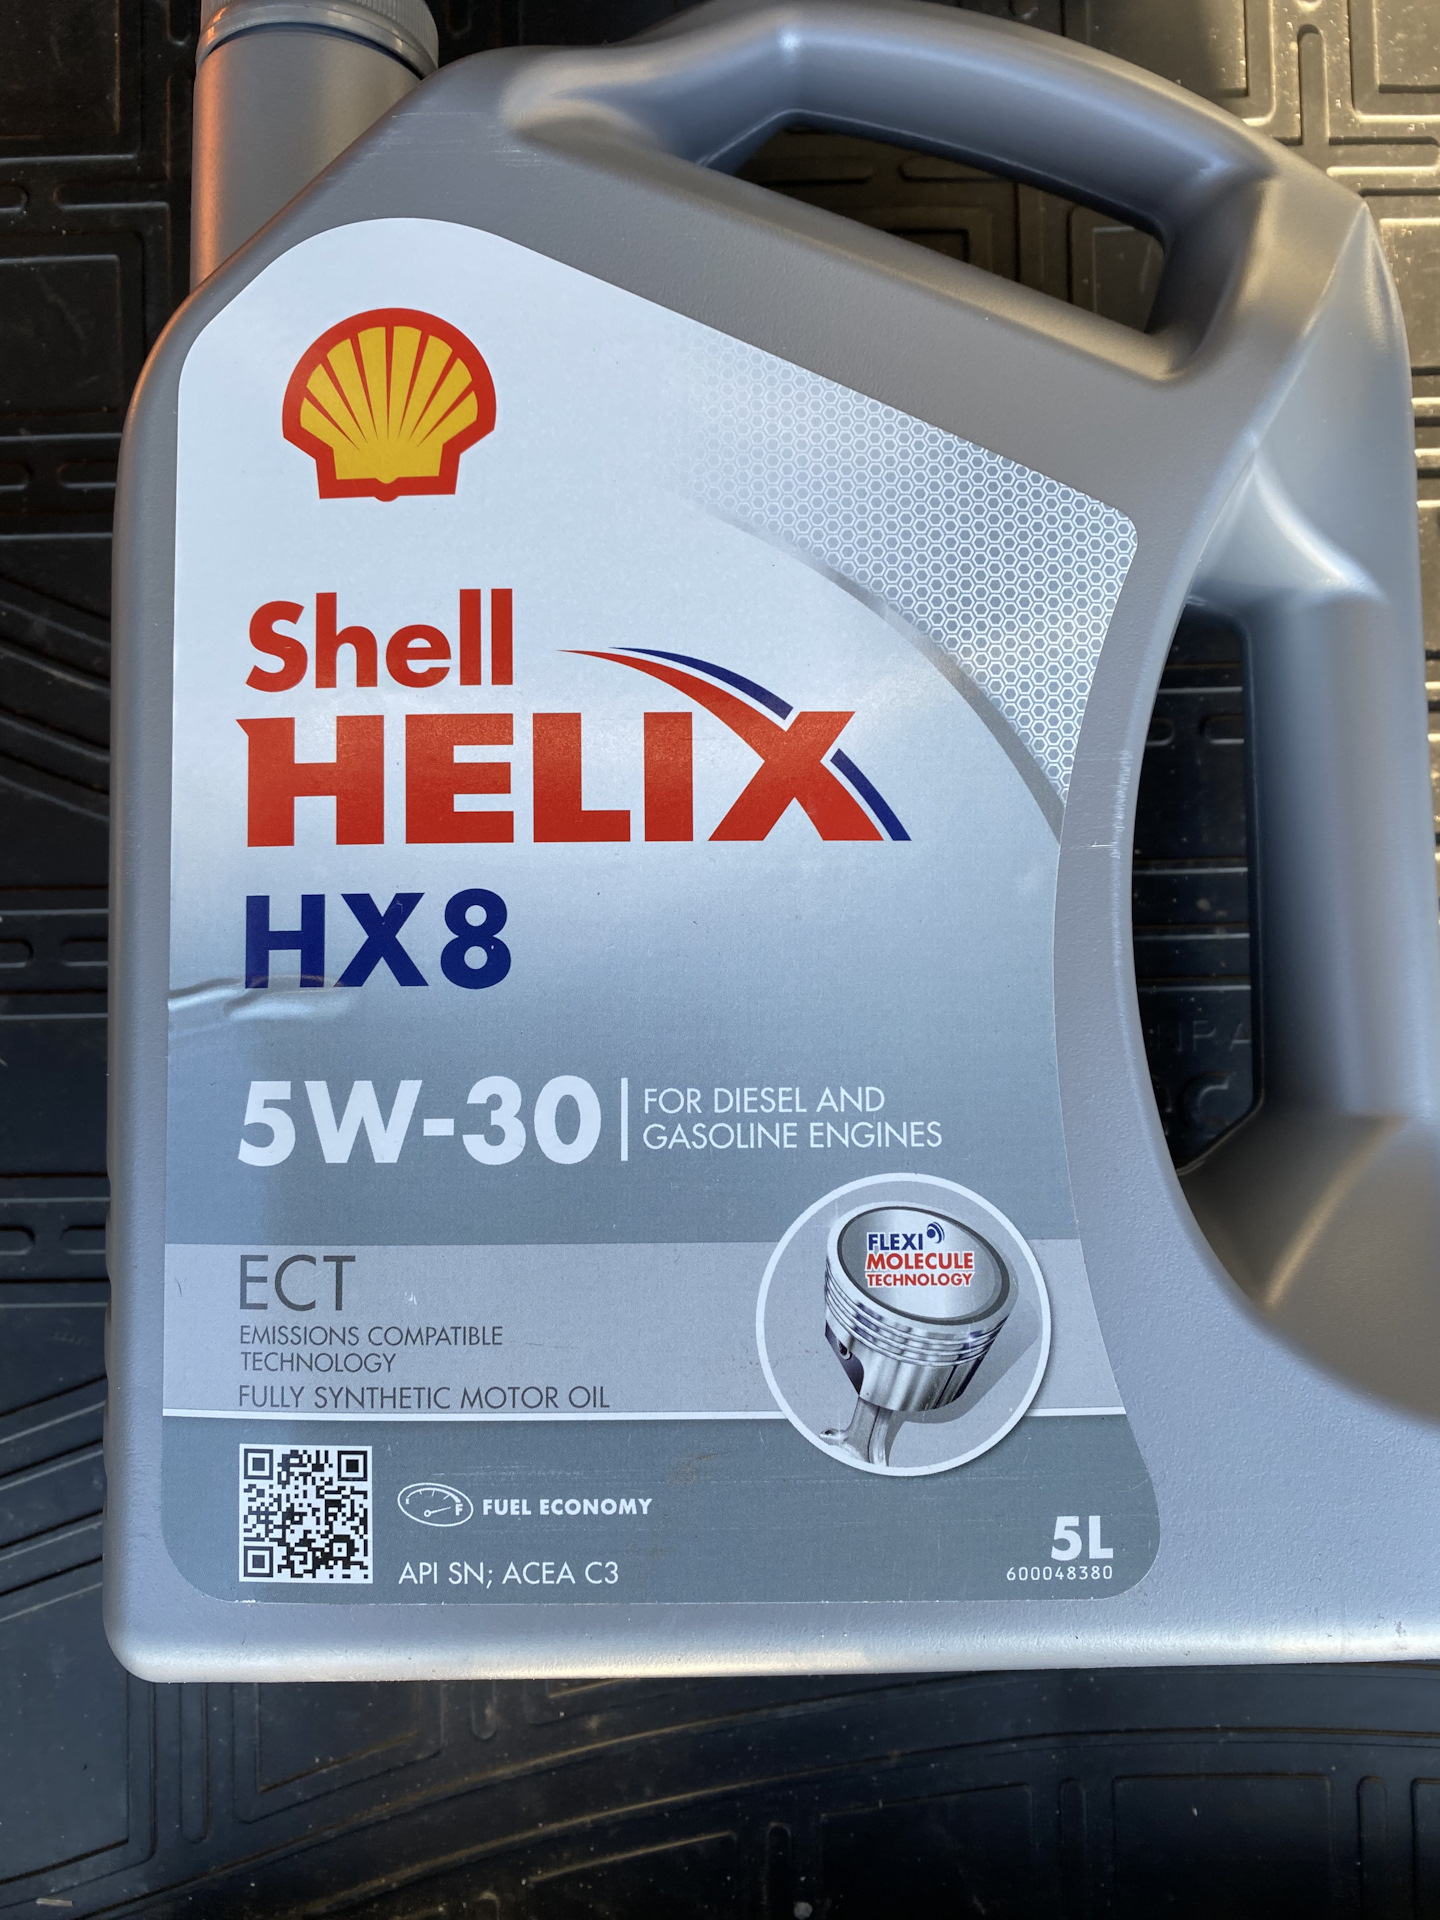 Масло shell 5w 30 ect. Shell hx8 5w30. Масло Шелл 5w30. Шелл Хеликс hx8 5w30. 2 Shell Helix hx8 ect 5w-30.